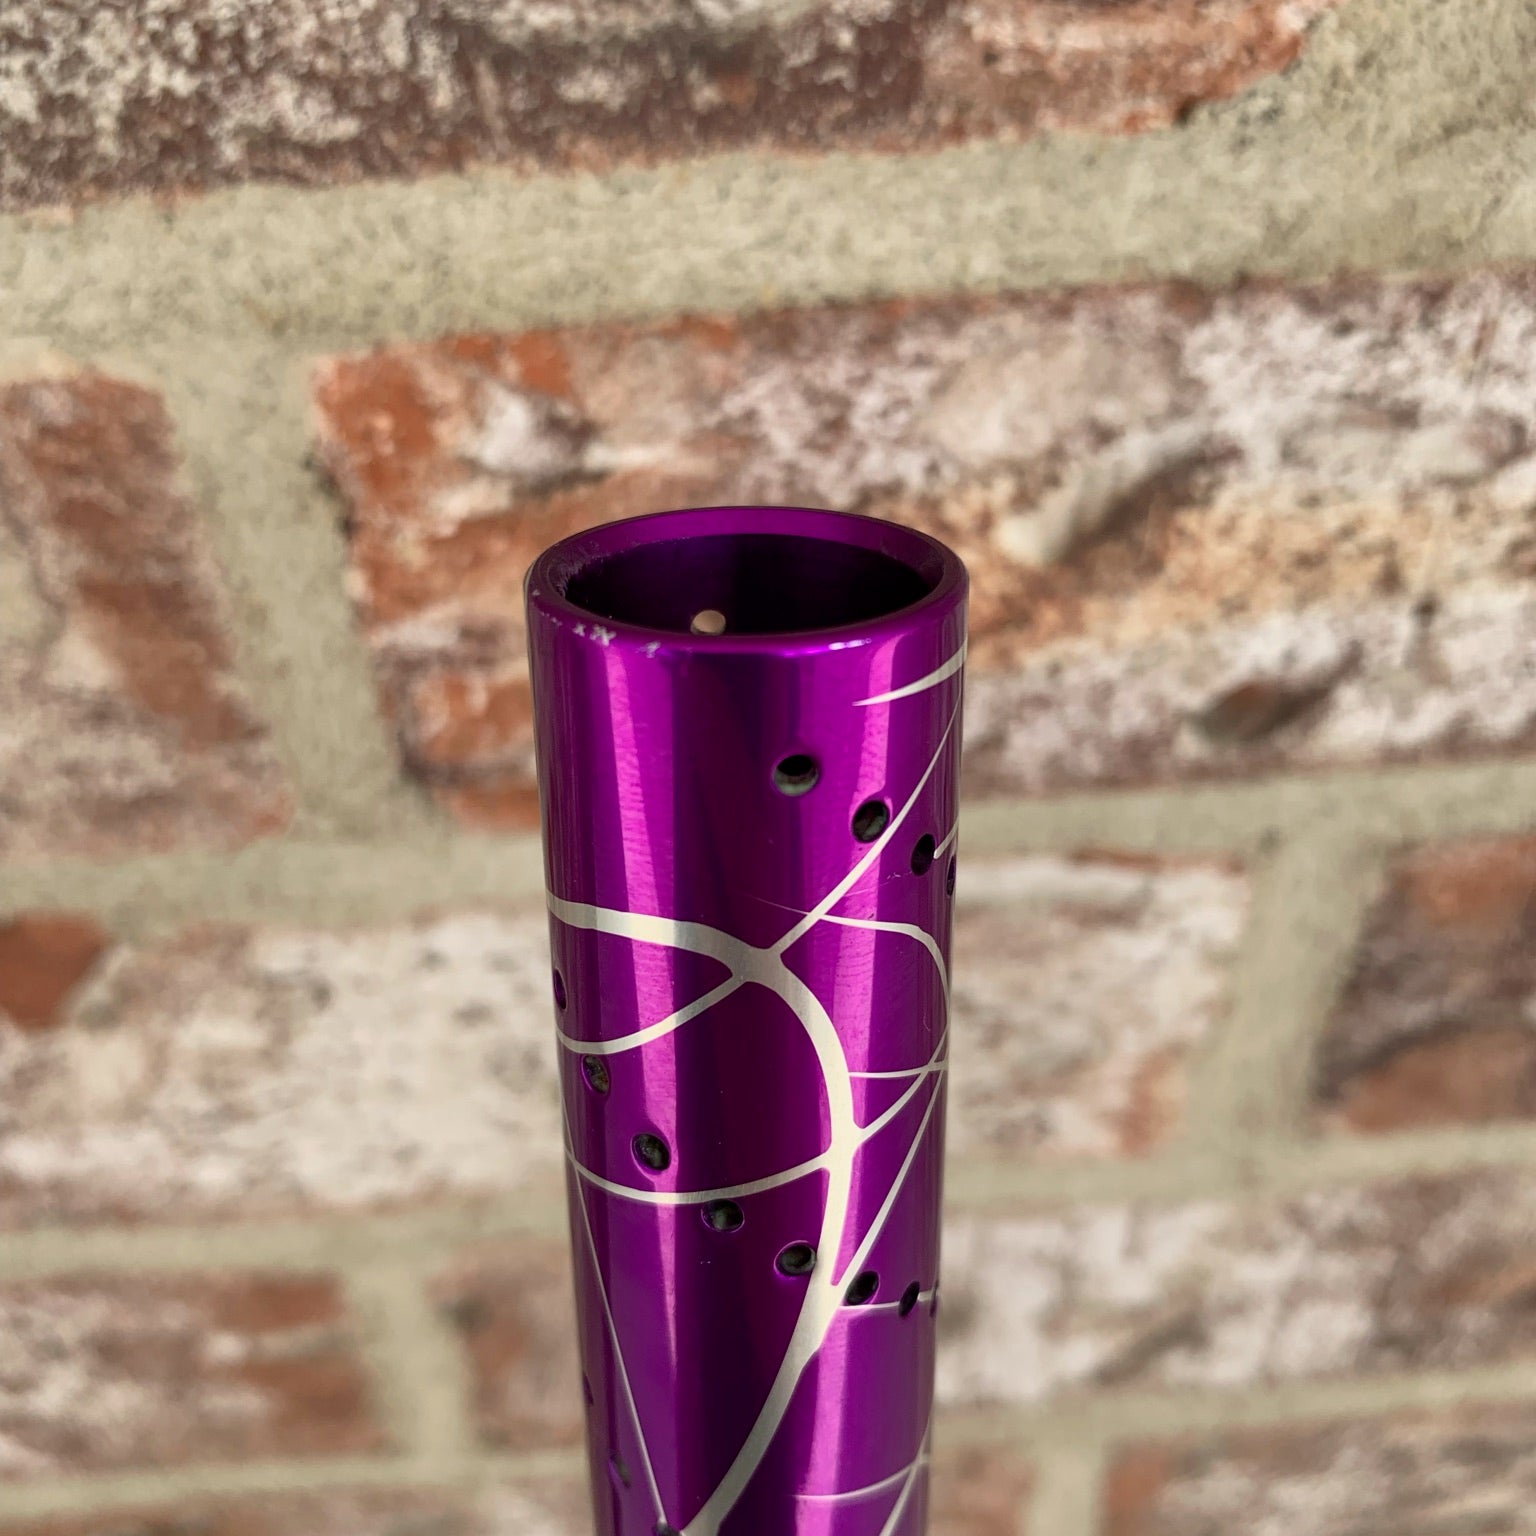 Used Shocker Amp Paintball Gun - Purple Splash